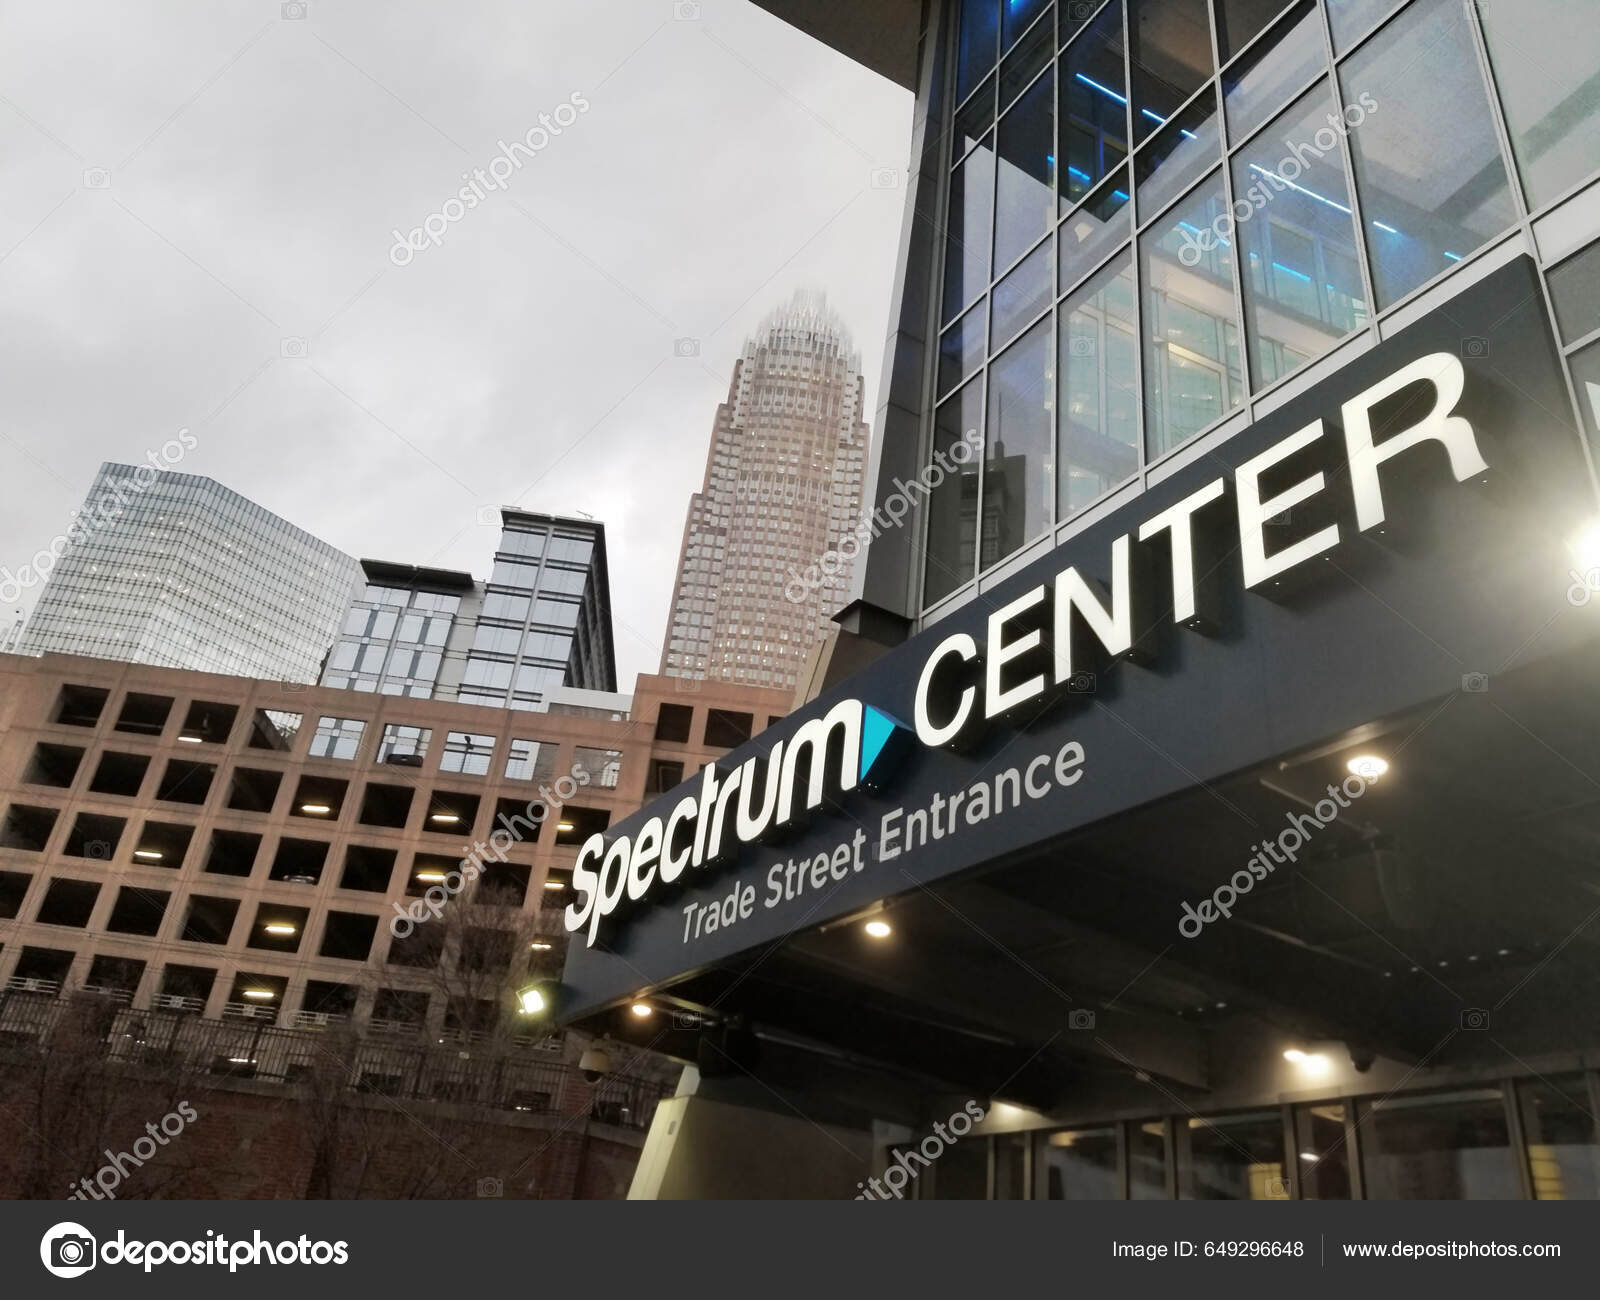 Spectrum Center - Charlotte, NC